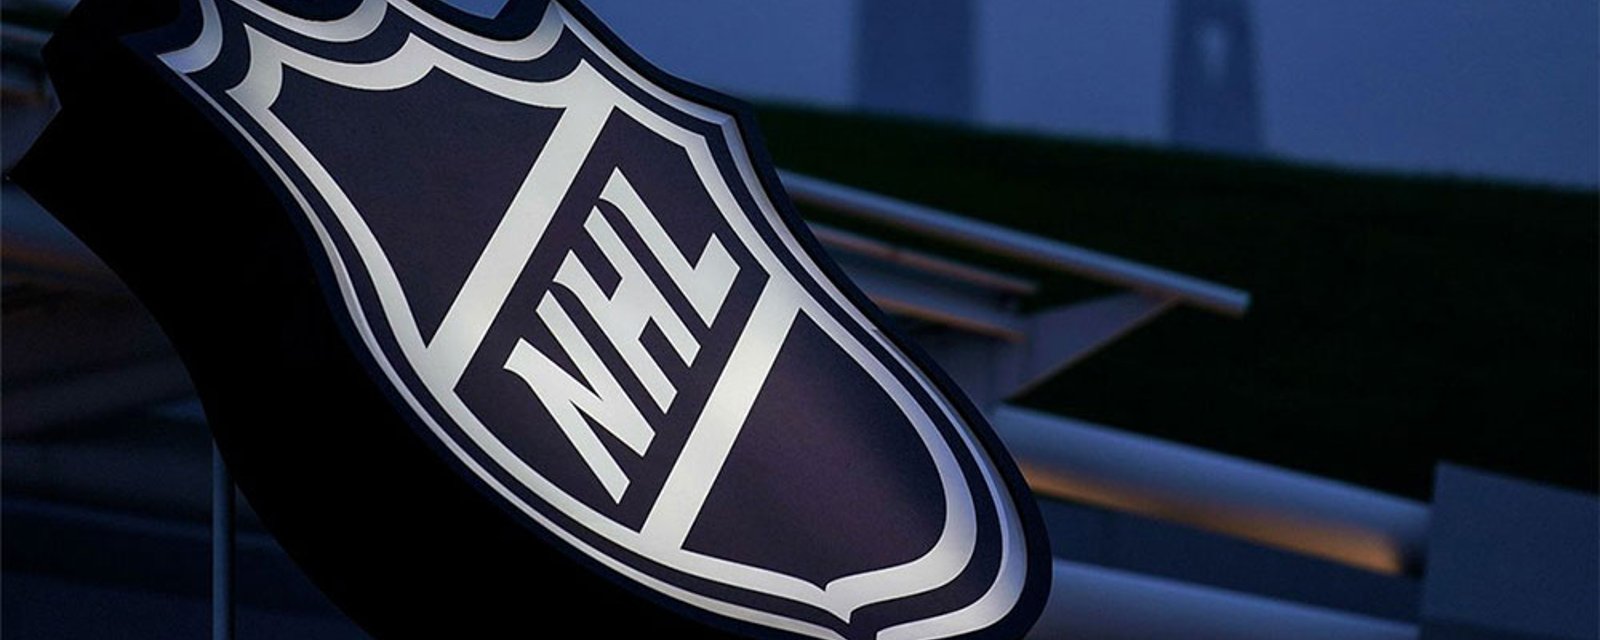 Breaking: Longtime NHL owner steps down, fans rejoice